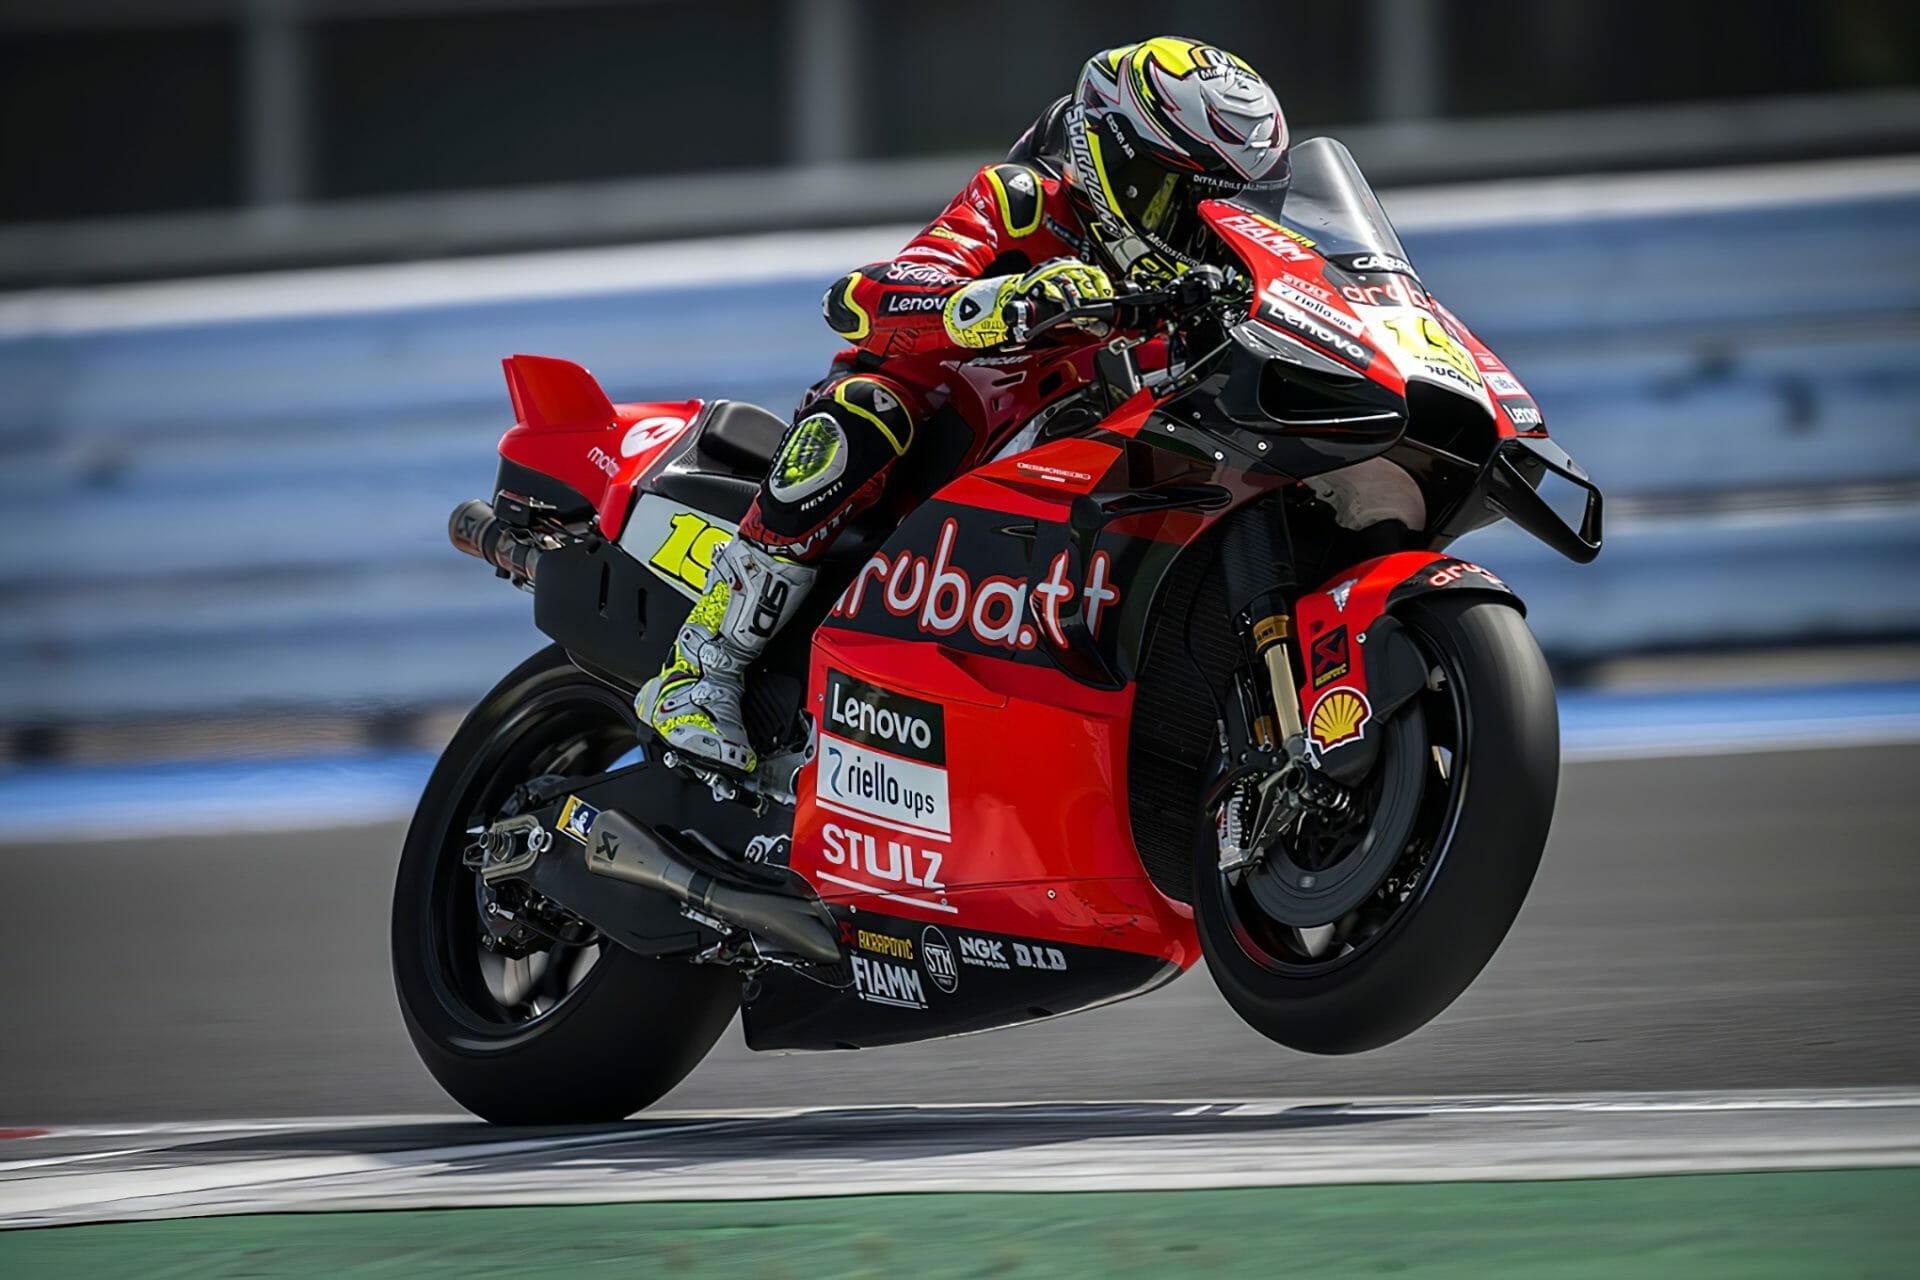 Ducati’s wild card: Alvaro Bautista takes to the MotoGP stage again